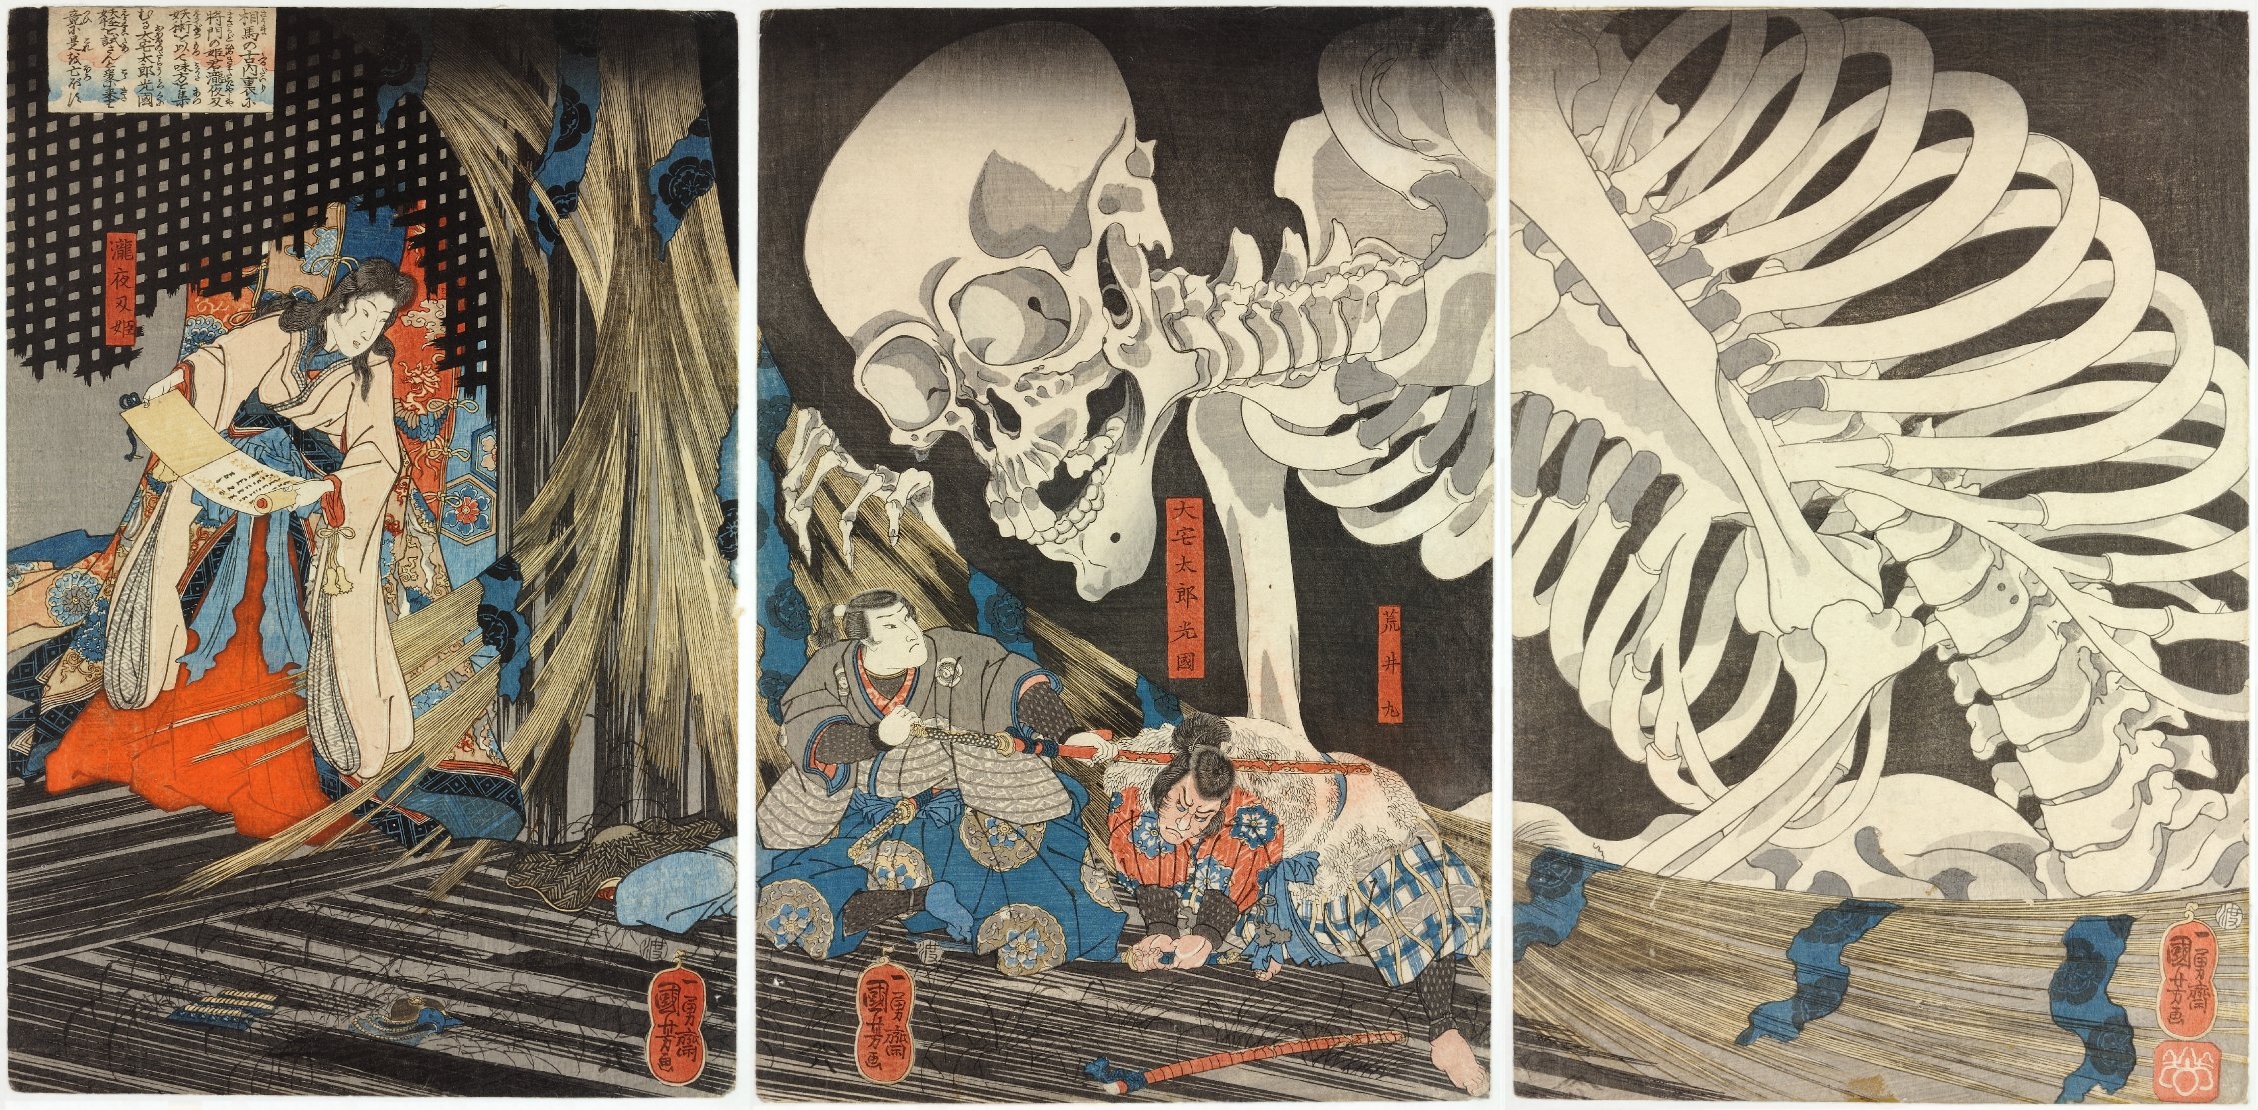 相馬の古内裏 by Utagawa Kuniyoshi - 1844年頃 - 35 x 71 cm 